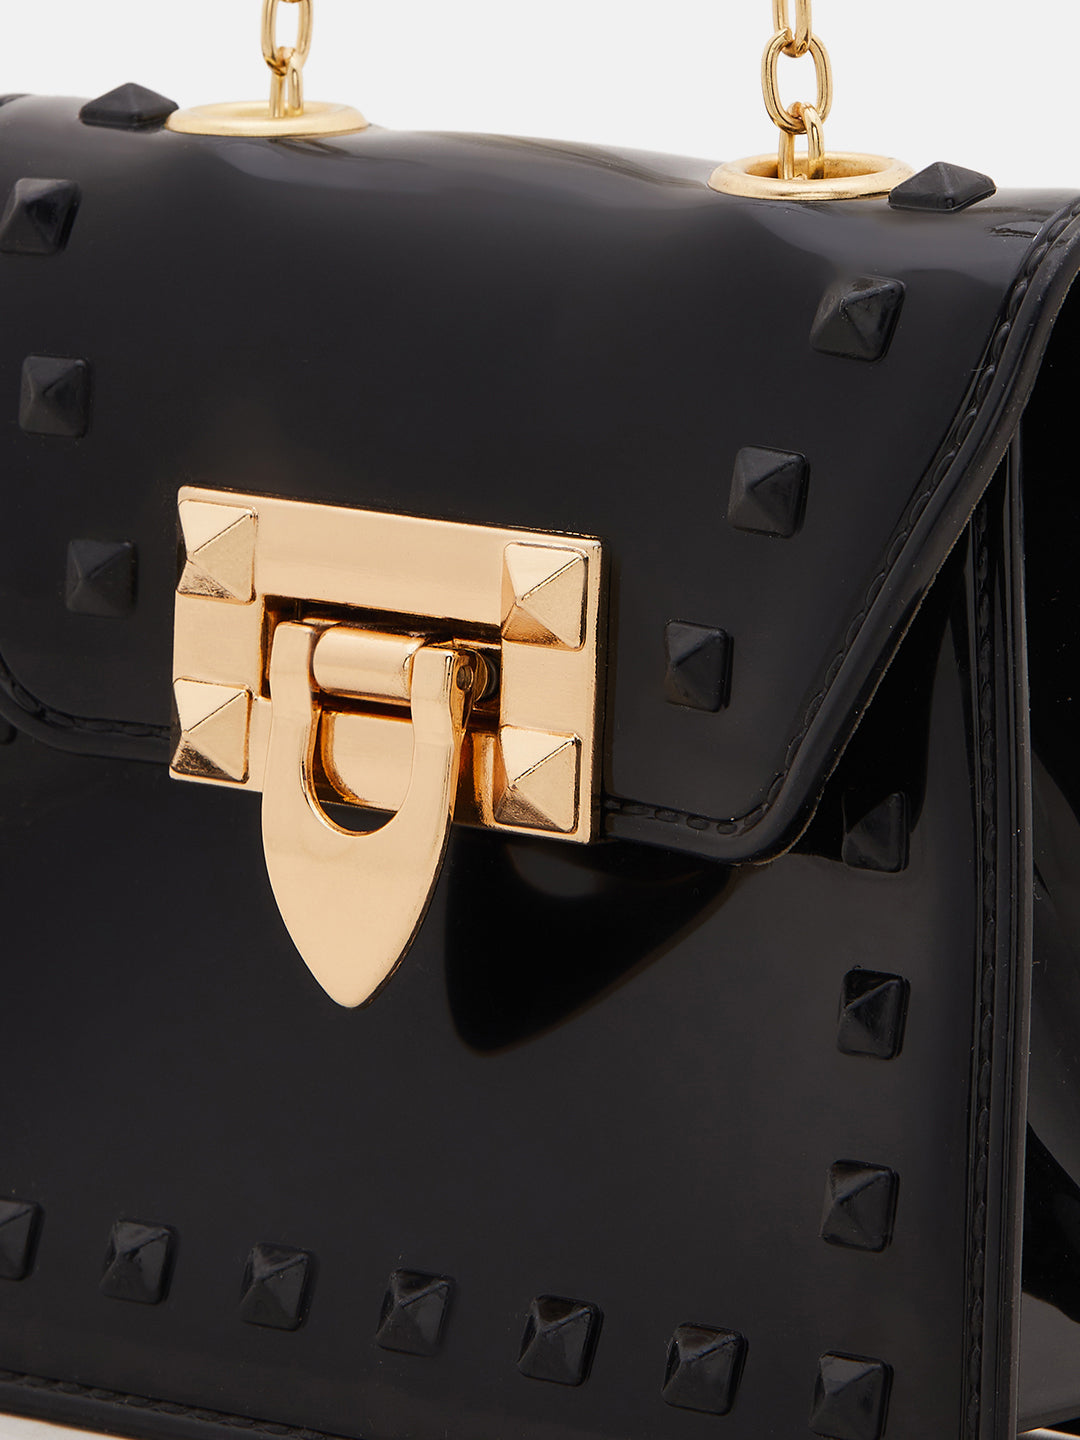 Athena Black Textured PU Structured Sling Bag - Athena Lifestyle